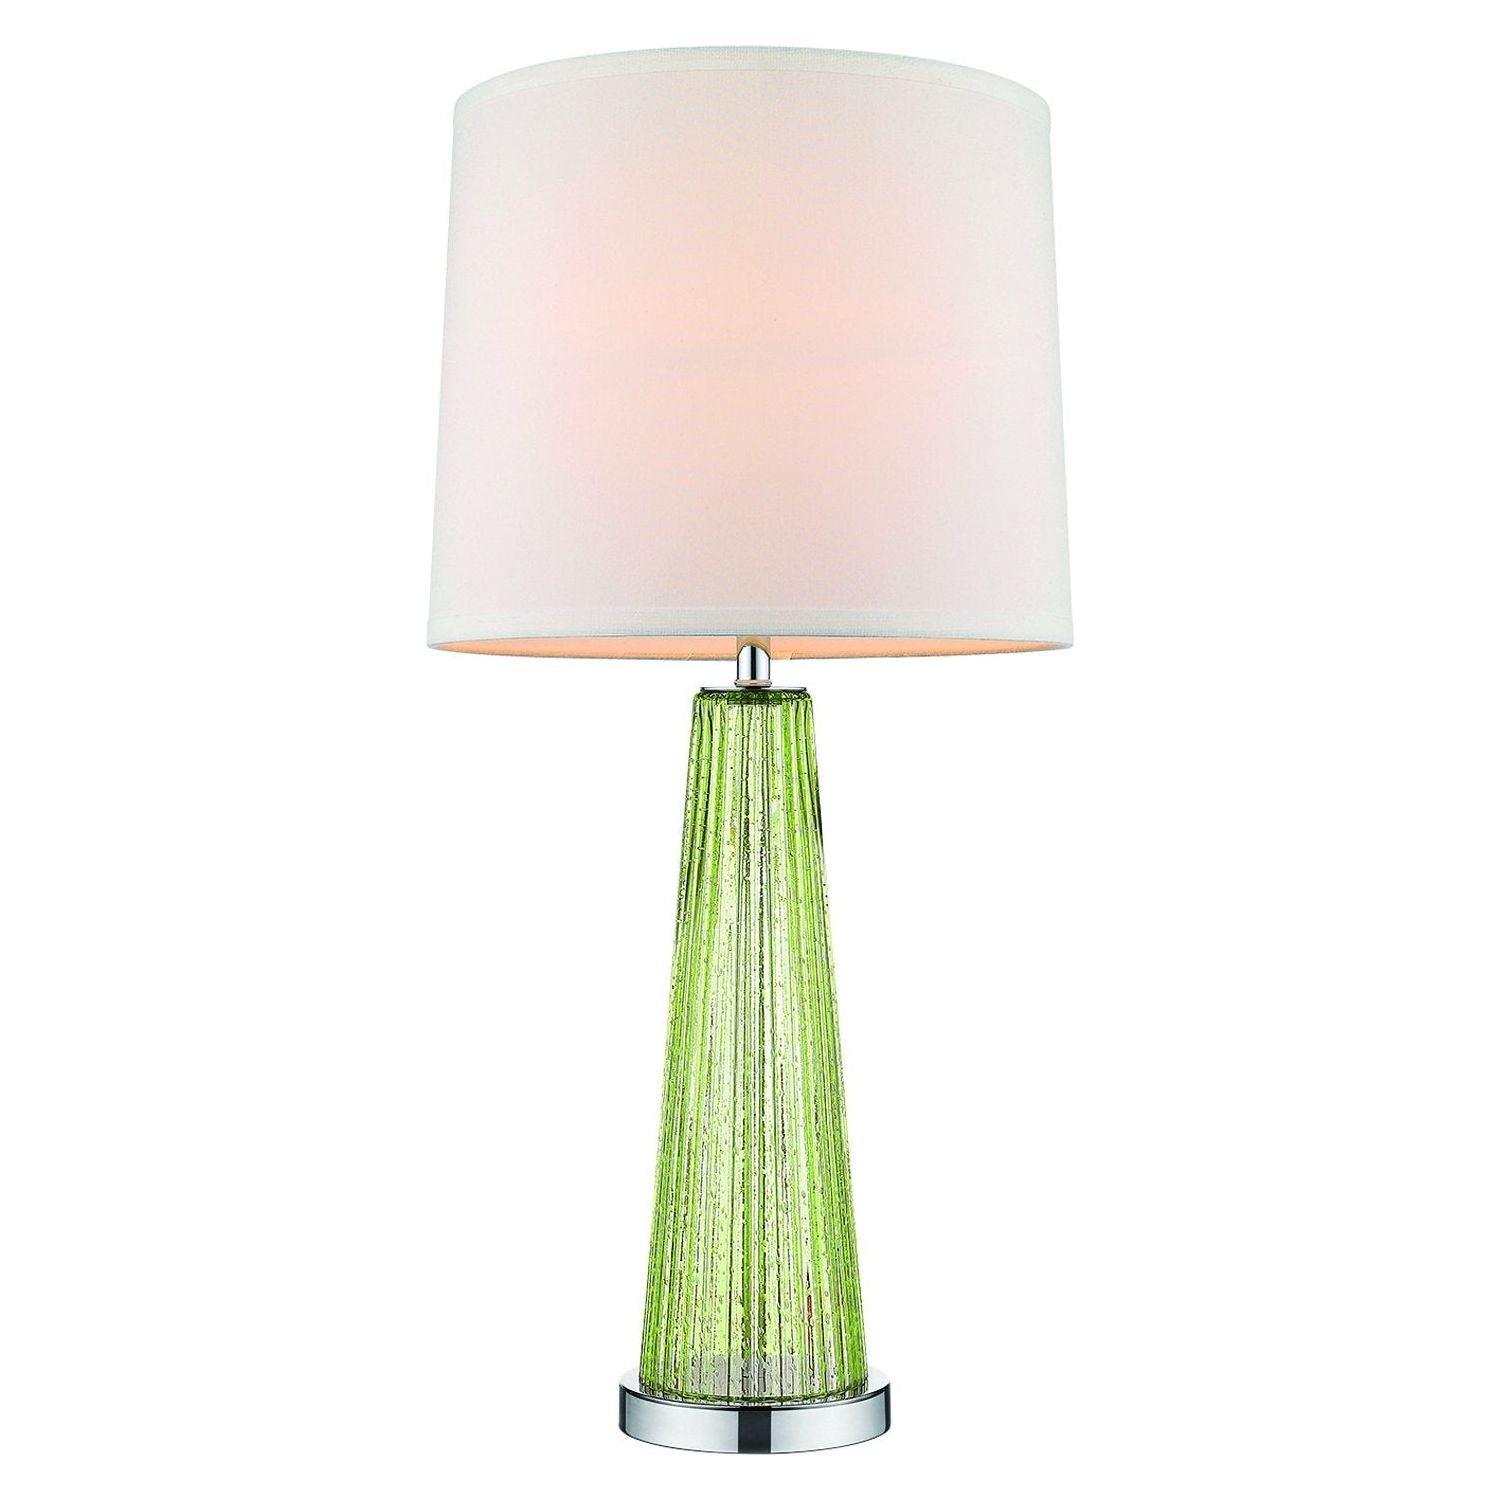 Trend - Chiara Table Lamp - Lights Canada